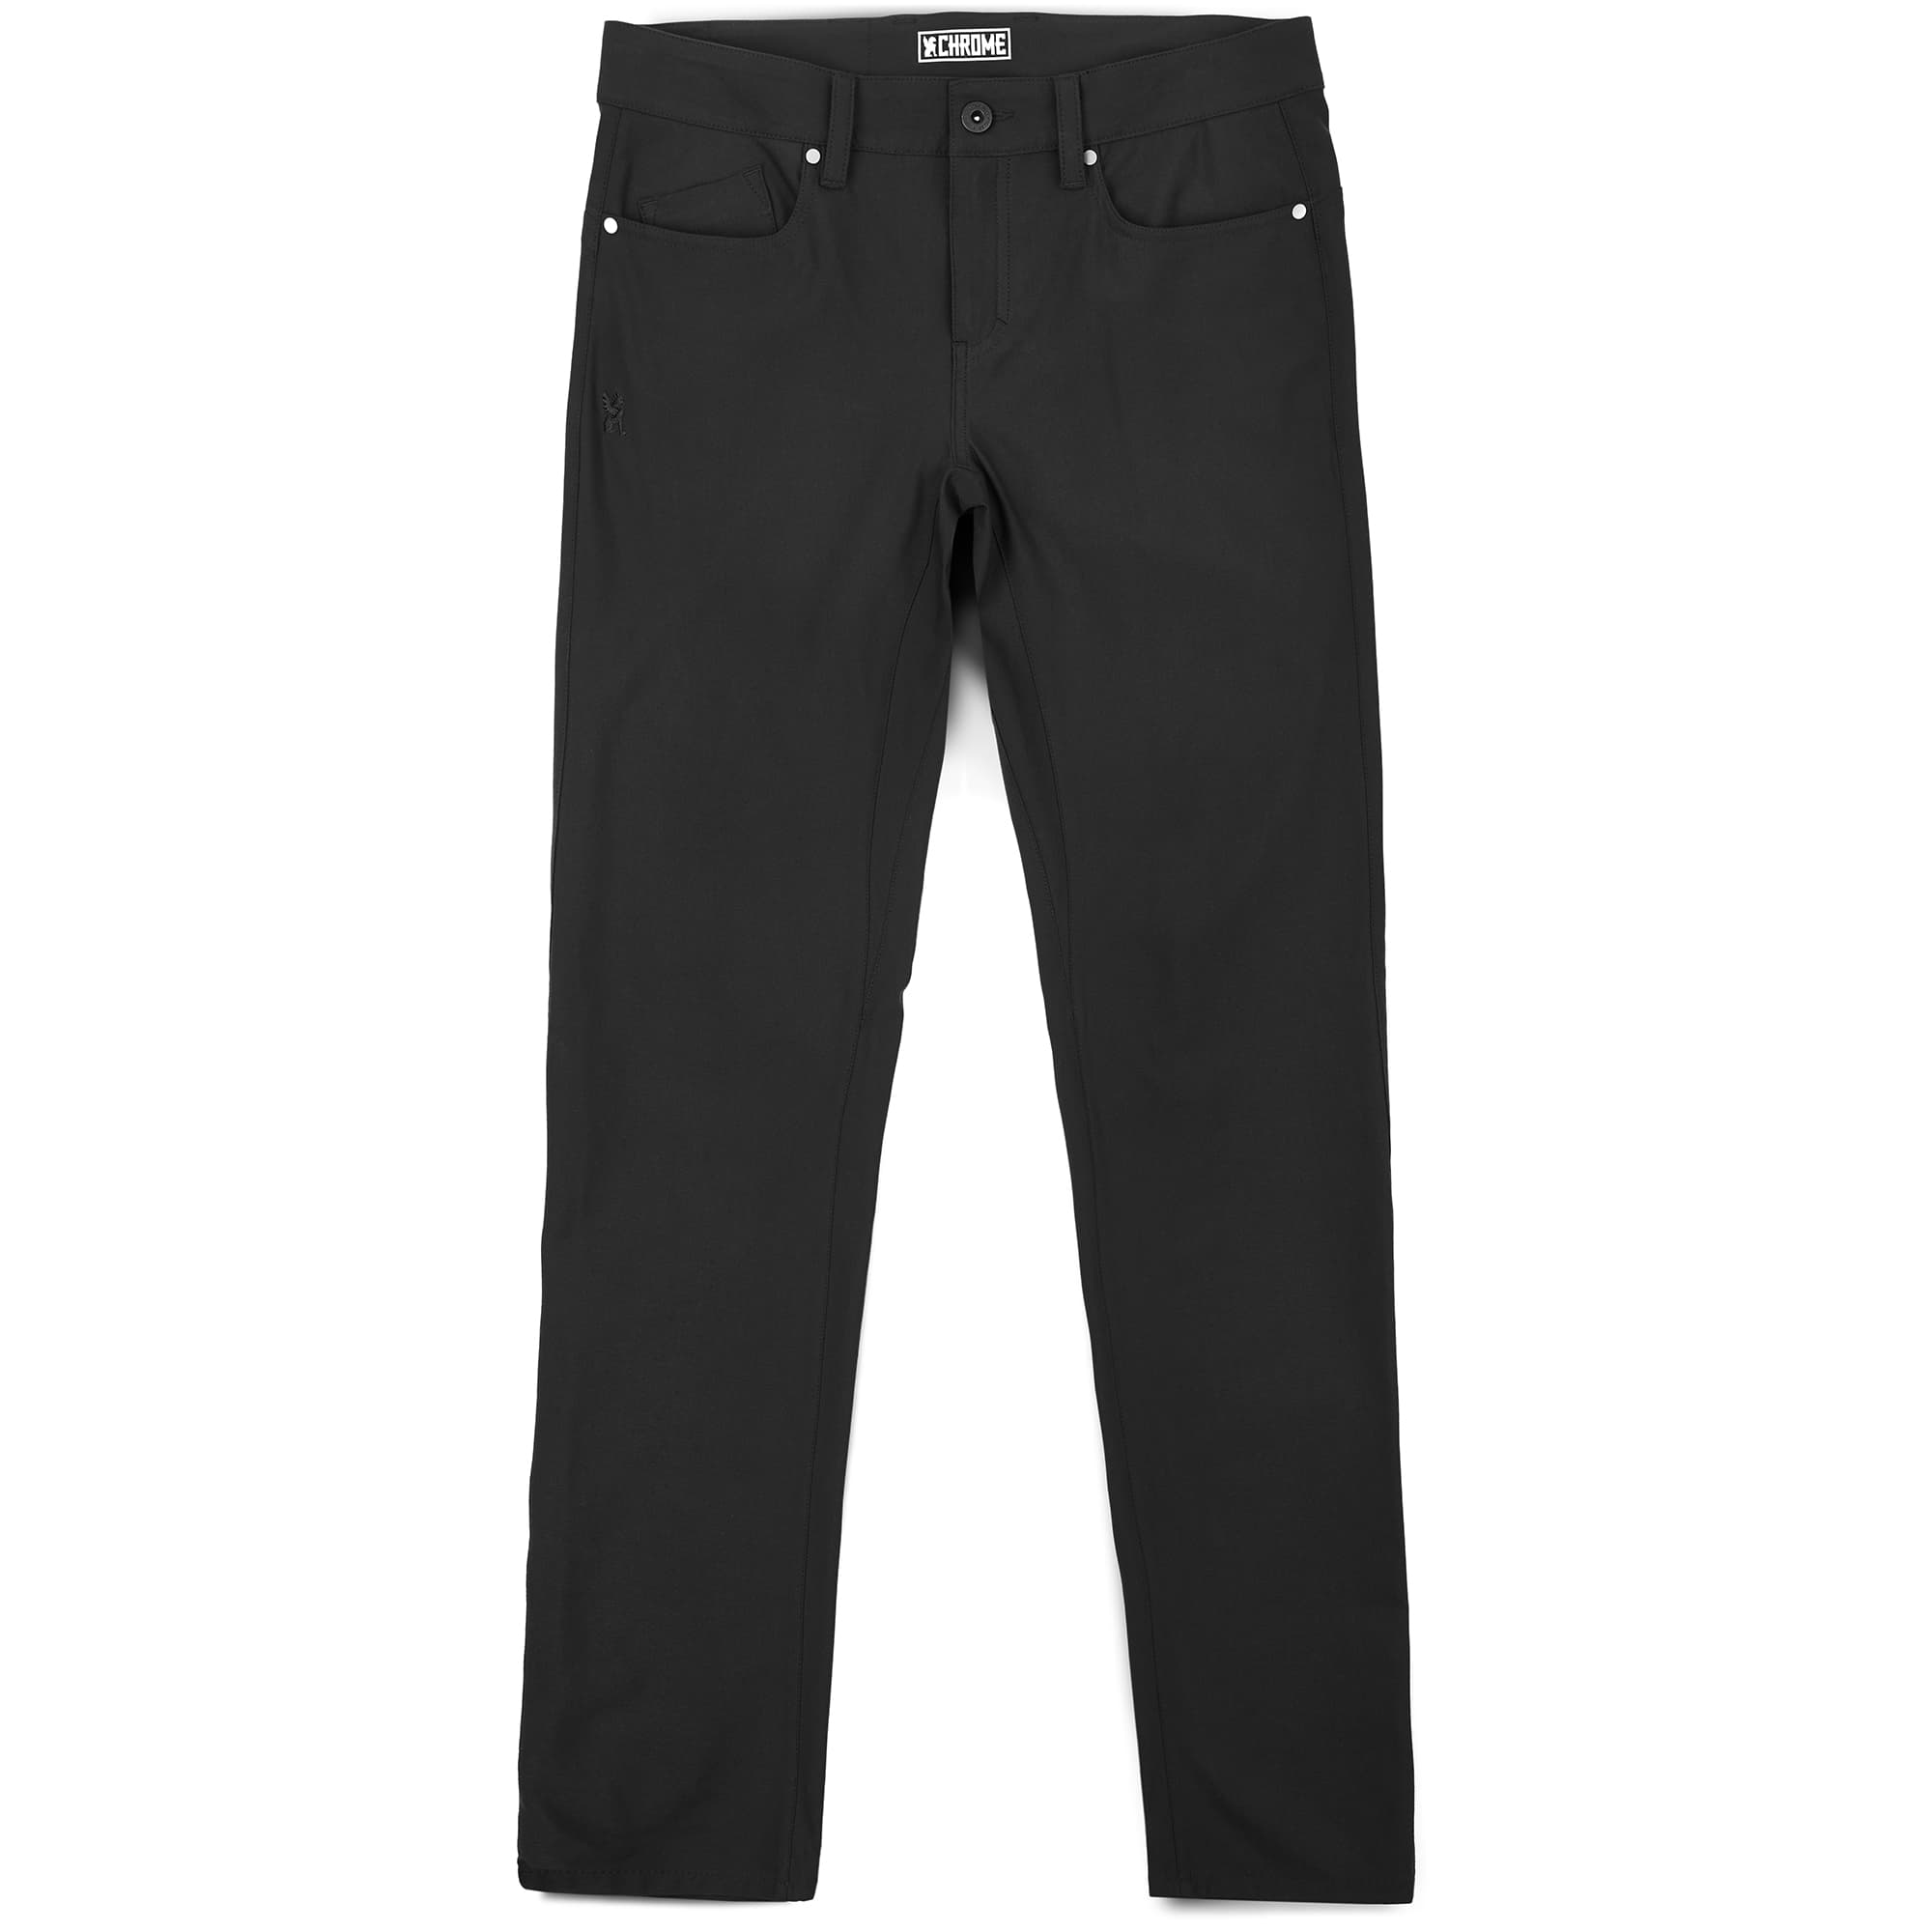 Women's 5 pocket pant in black